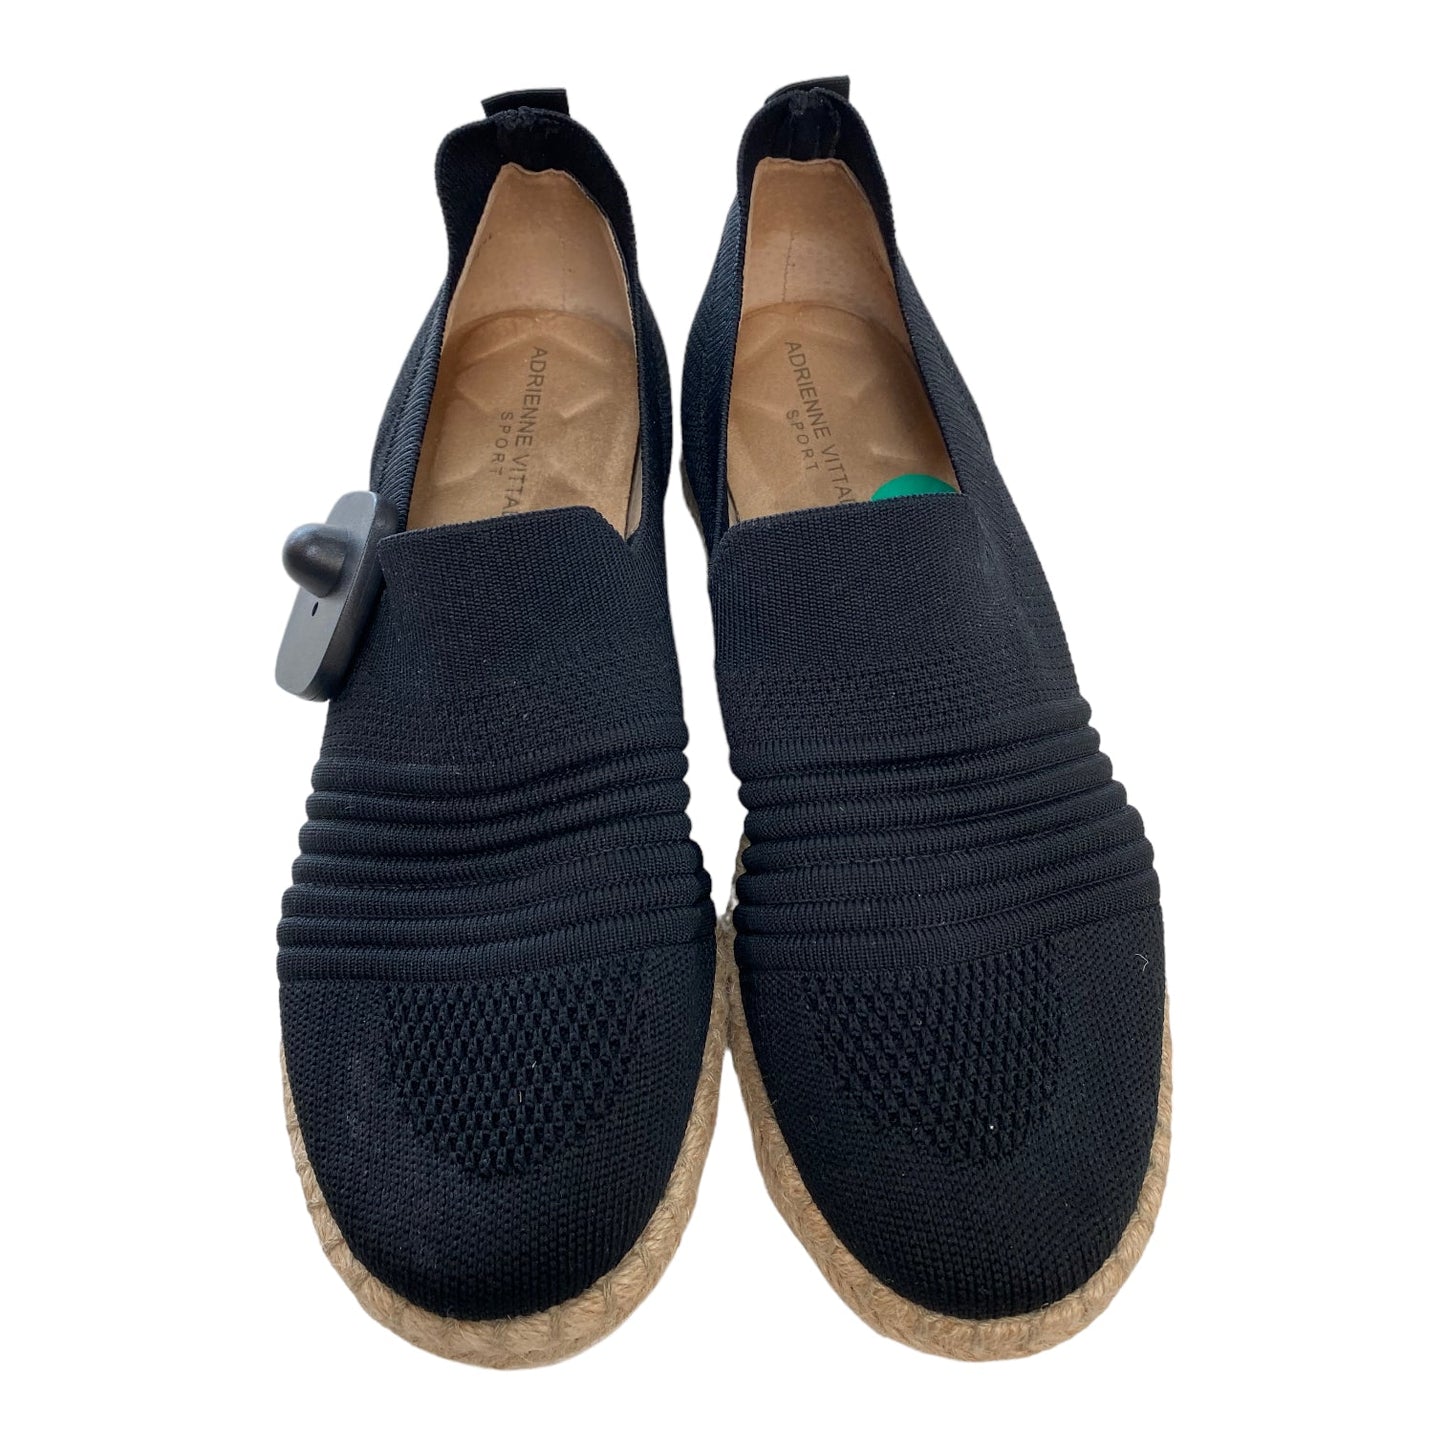 Black Shoes Flats Adrienne Vittadini, Size 8